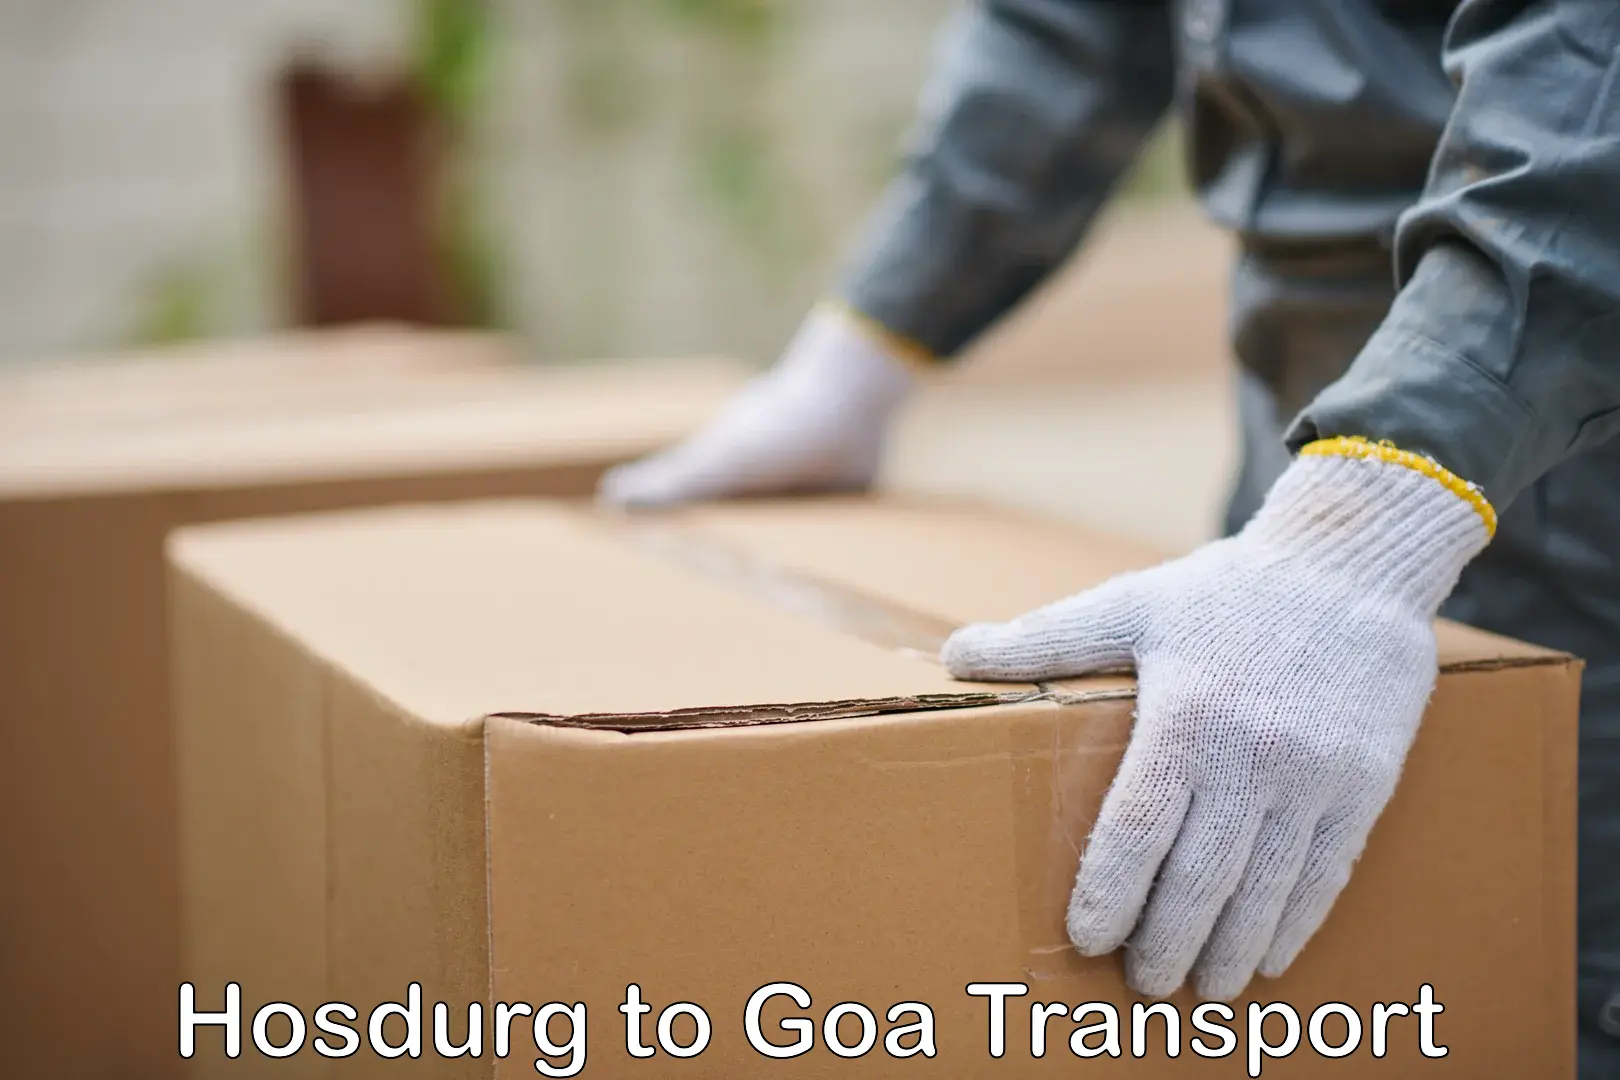 Bike transport service in Hosdurg to Goa